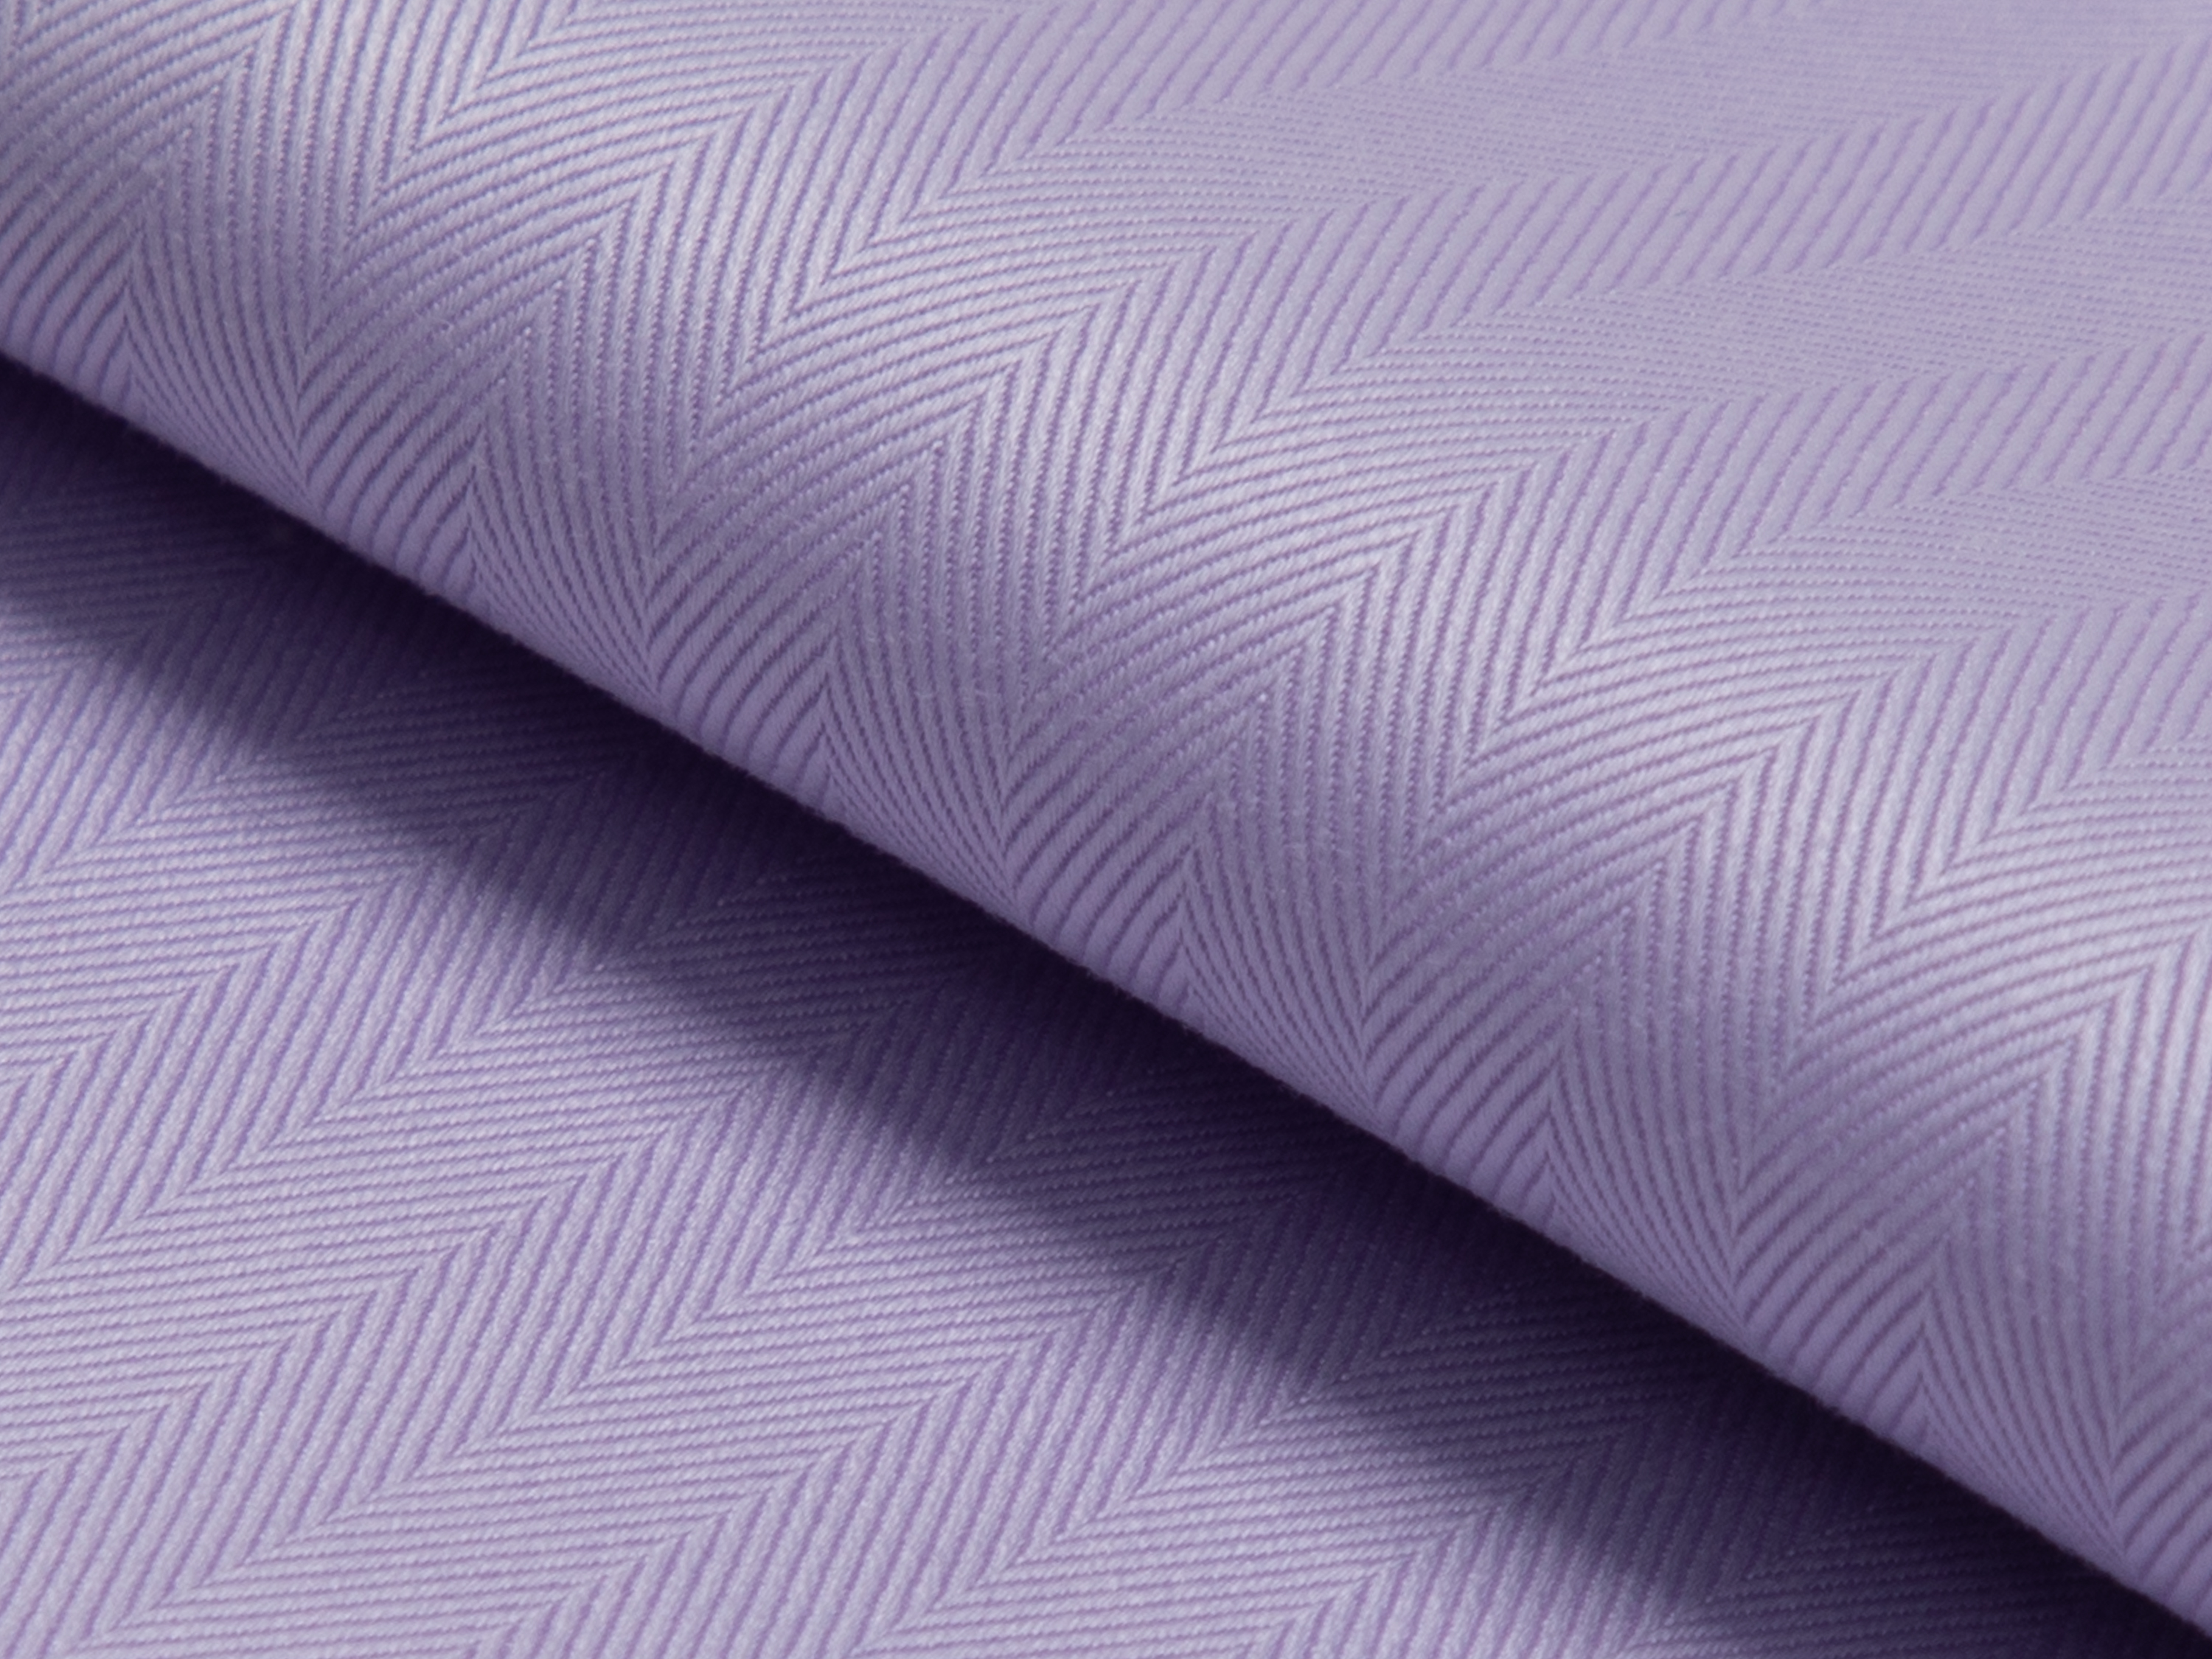 Buy tailor made shirts online - MAYFAIR - Herringbone Lilac